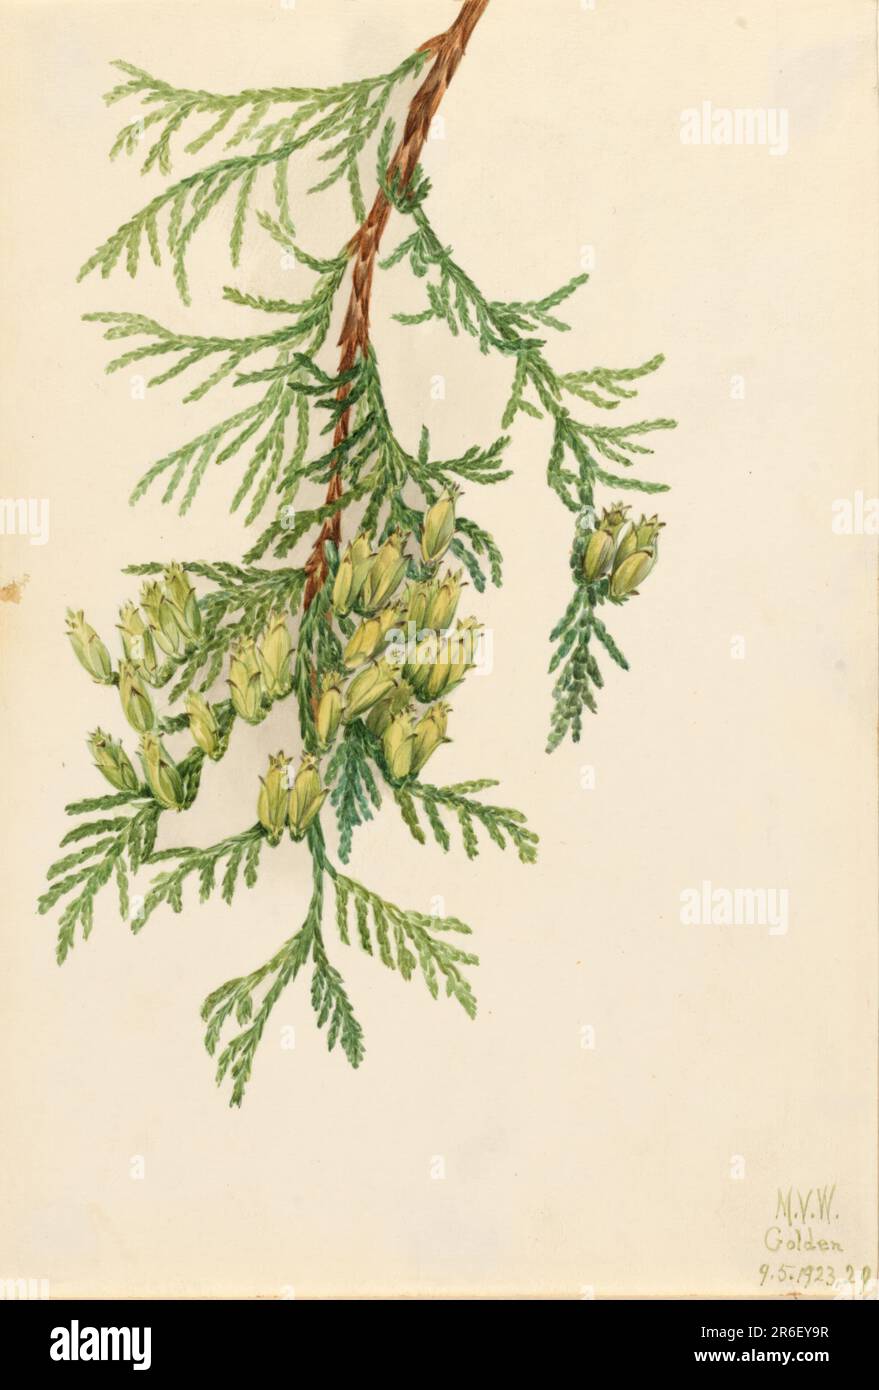 Giant Arborvitae (Thuja plicata). Watercolor on paper. Date: 1923. Museum: Smithsonian American Art Museum. Stock Photo